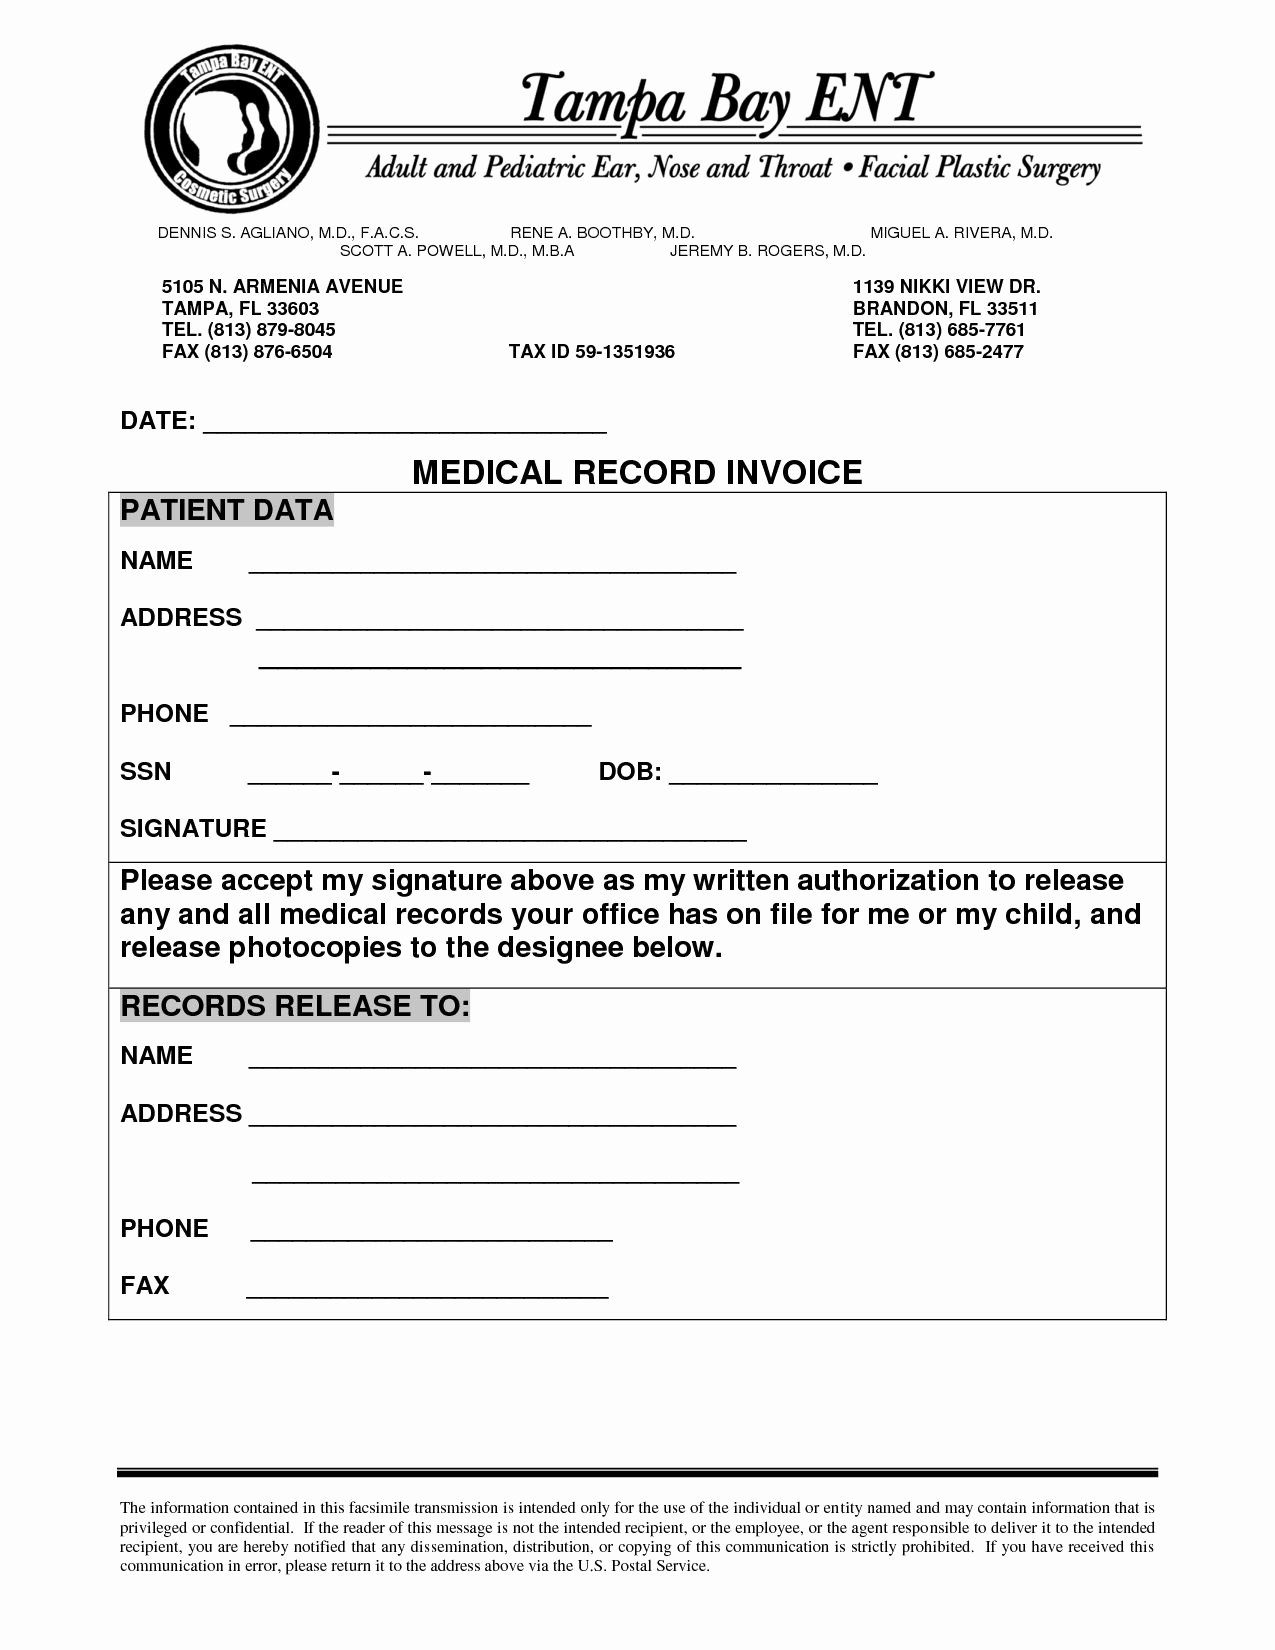 Invoice for Medical Records Template Unique Interpreter Resume Medical Records Invoice Sample